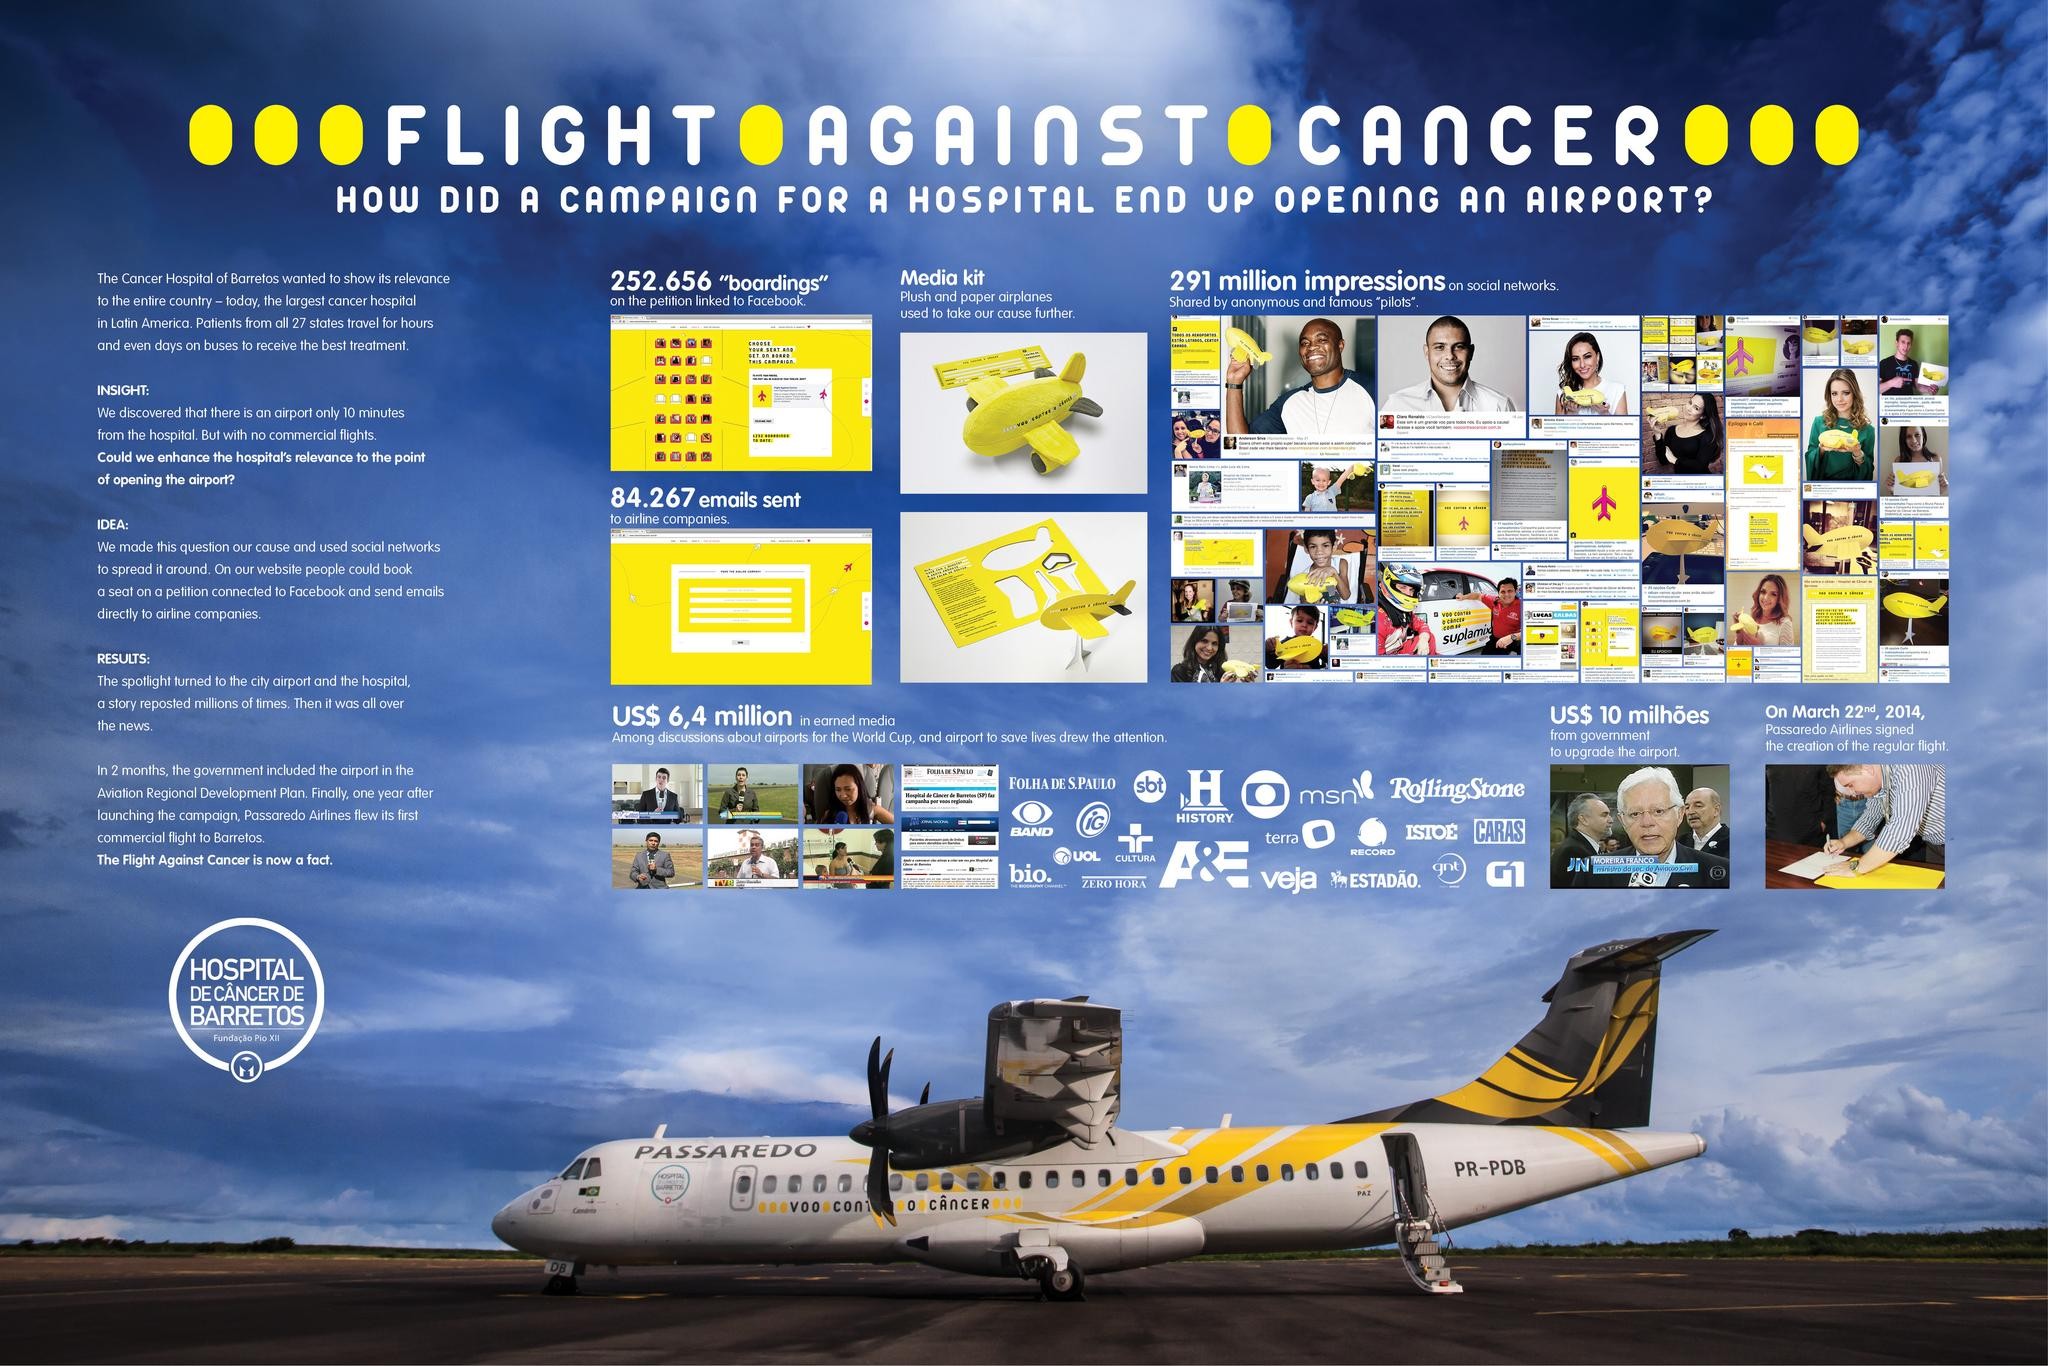 FLIGHT AGAINST CANCER